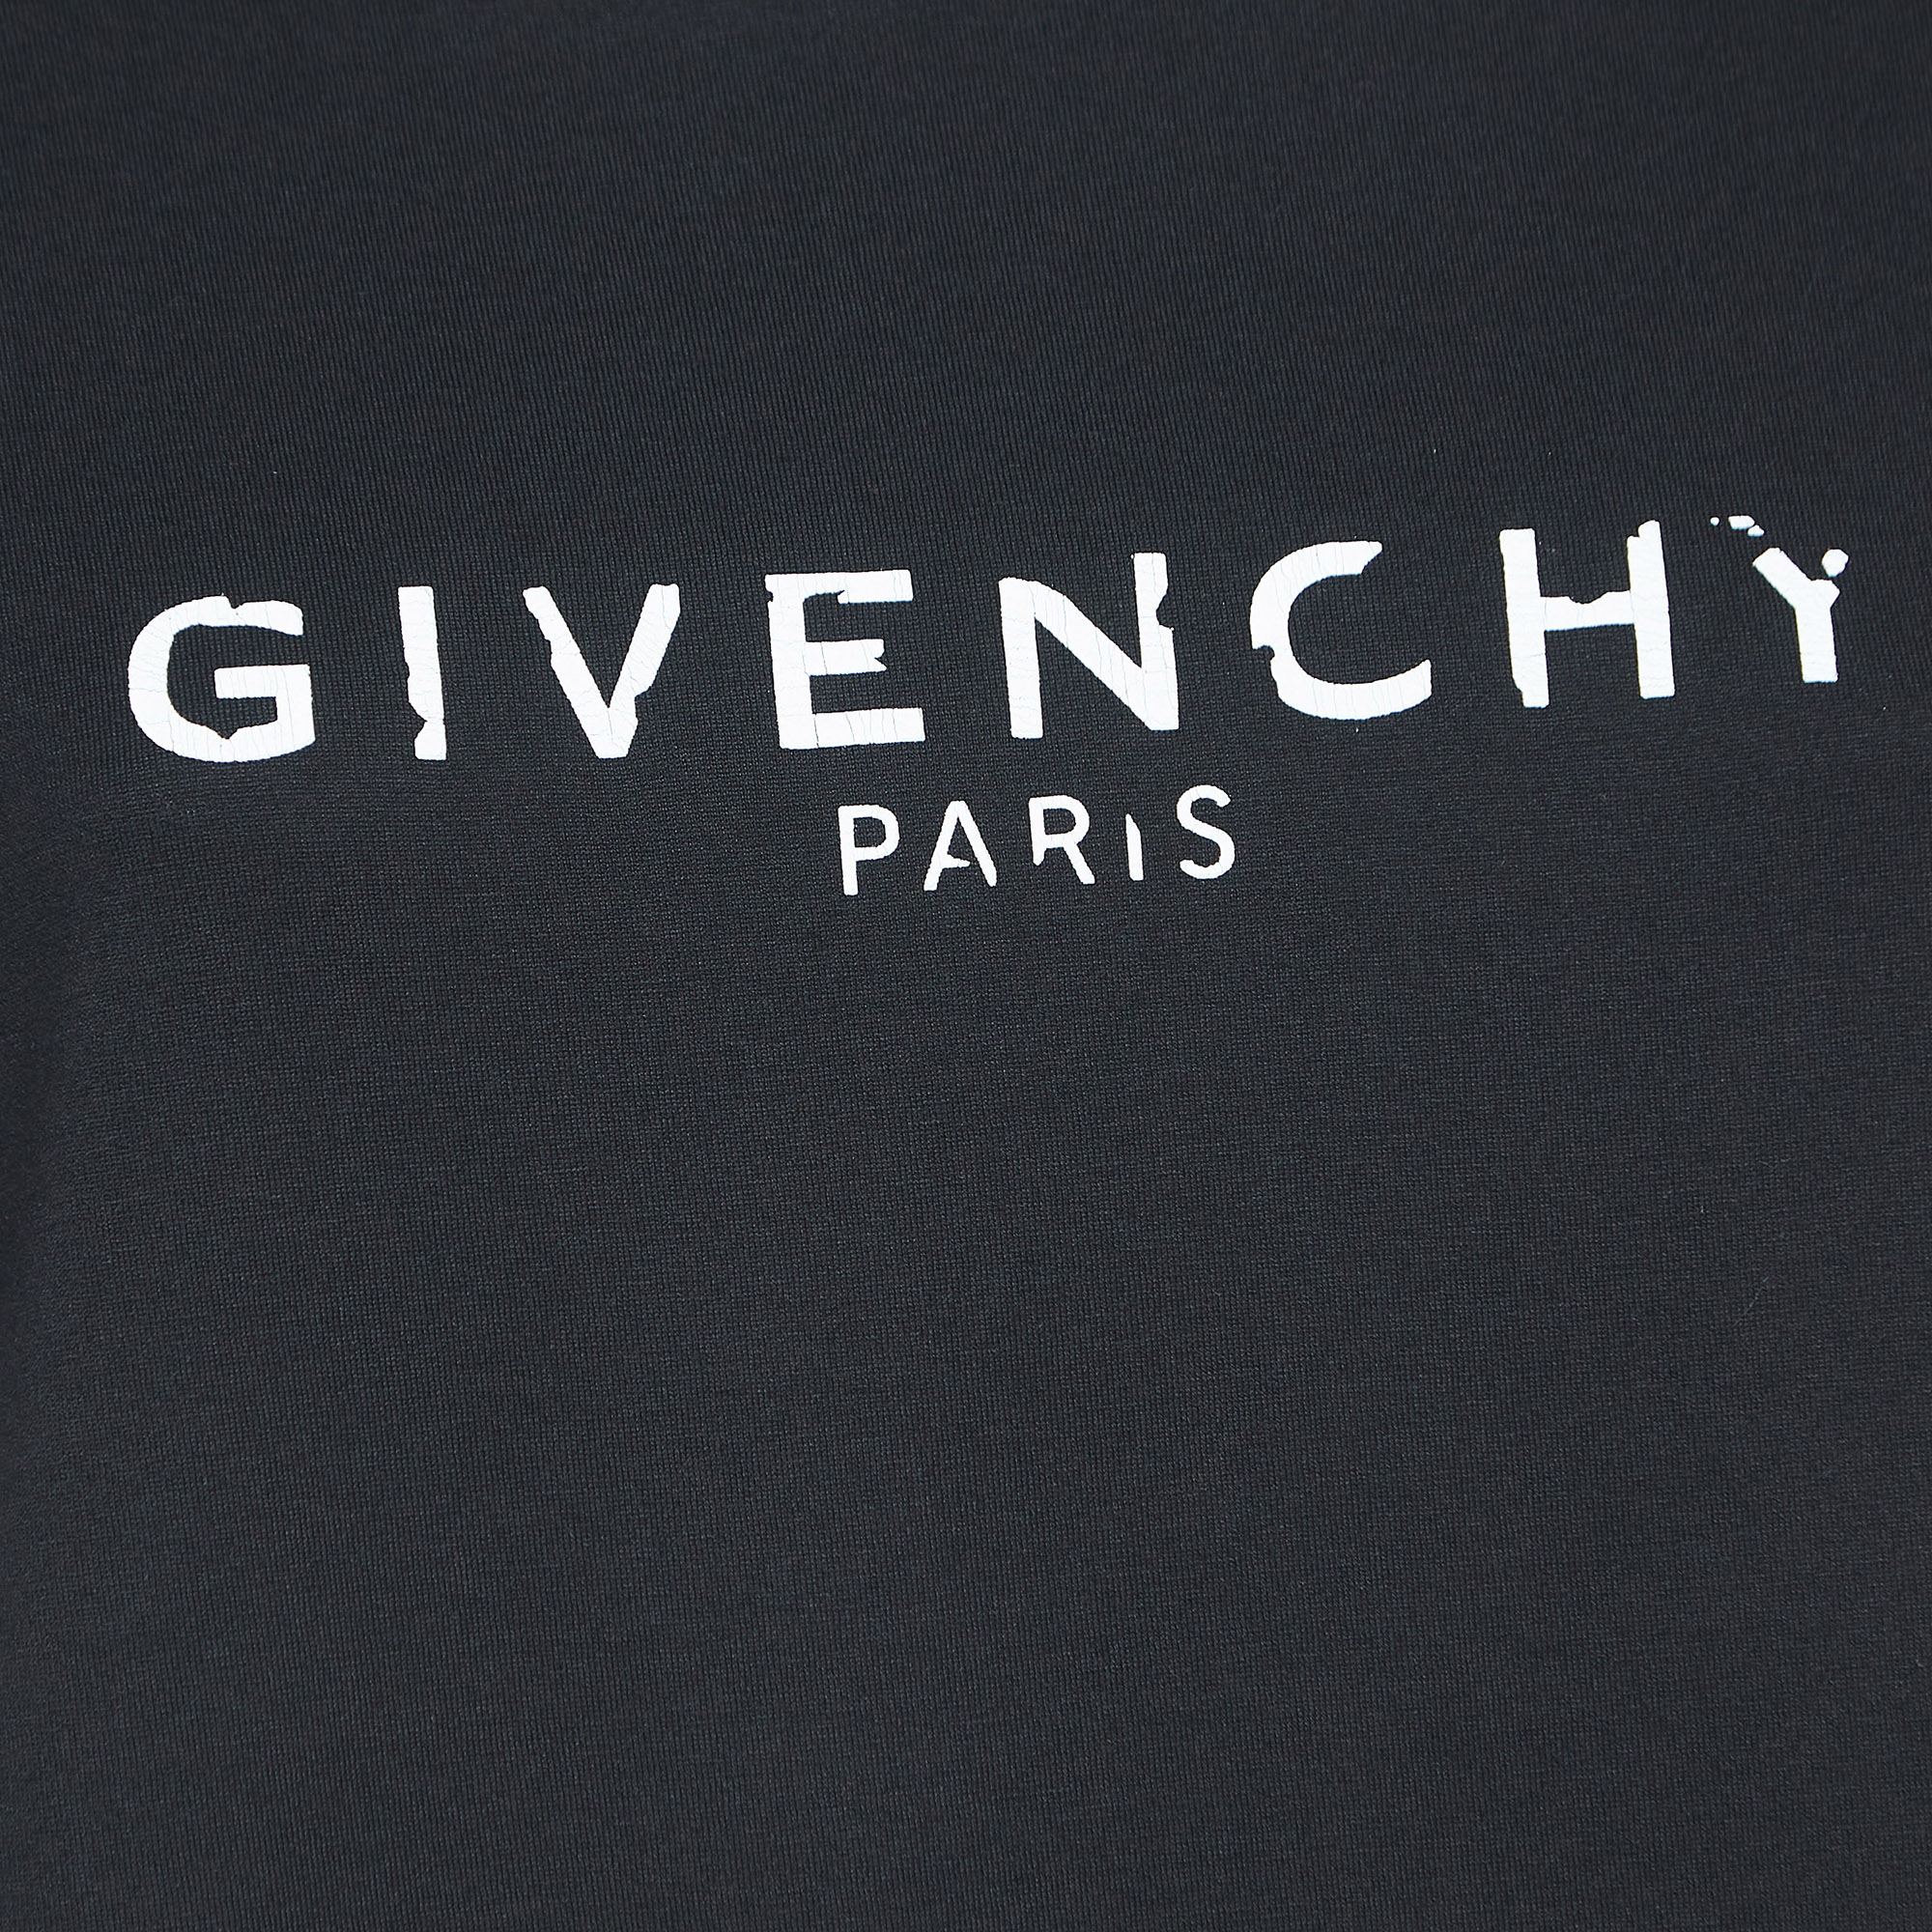 Givenchy Black Blurred Logo Print Half Sleeve T-Shirt L